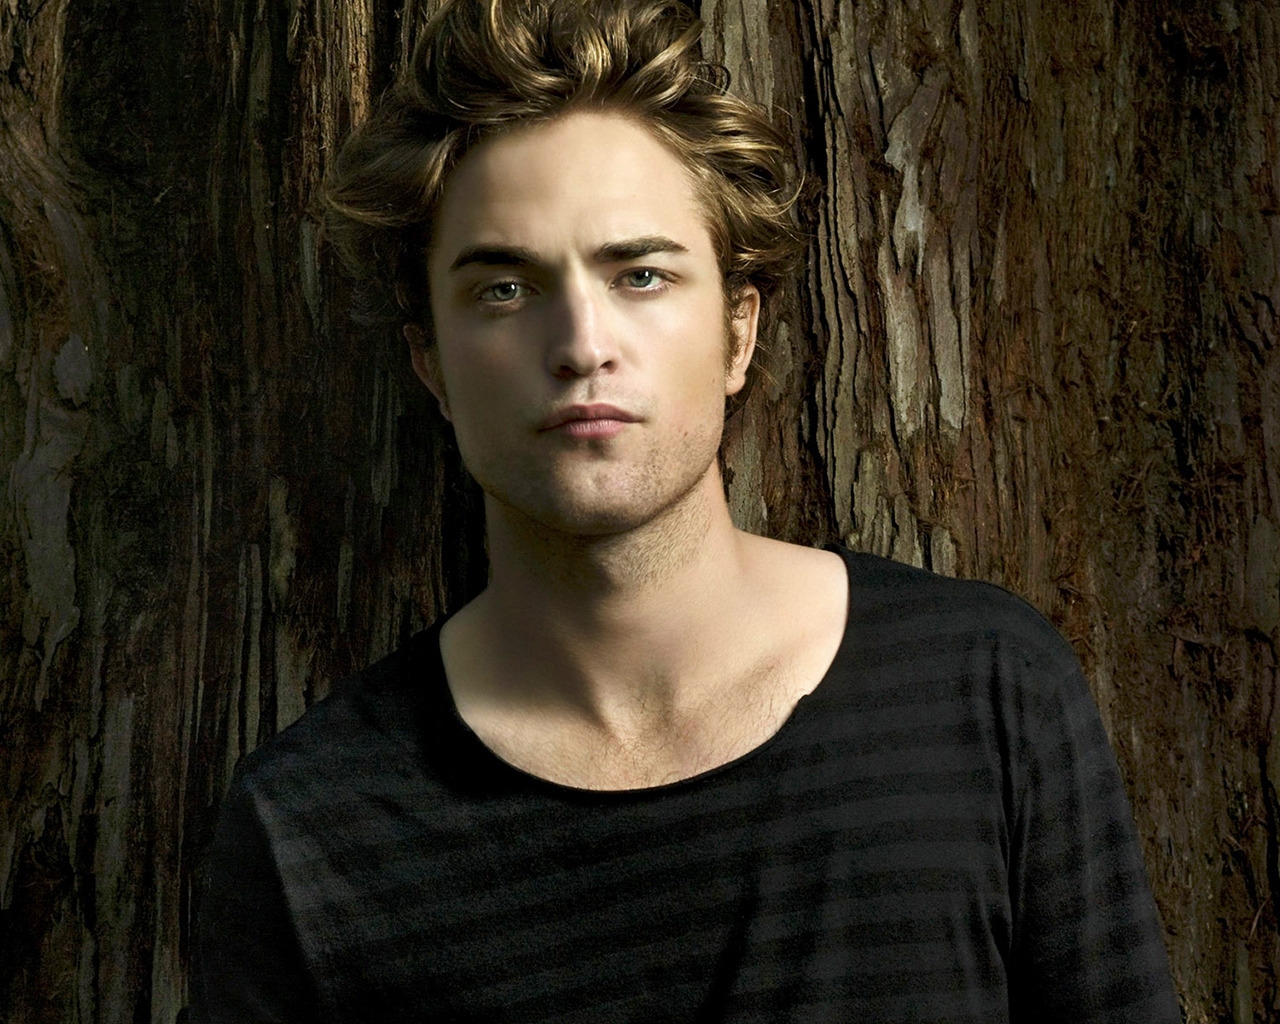 Handsome Robert Pattinson for 1280 x 1024 resolution